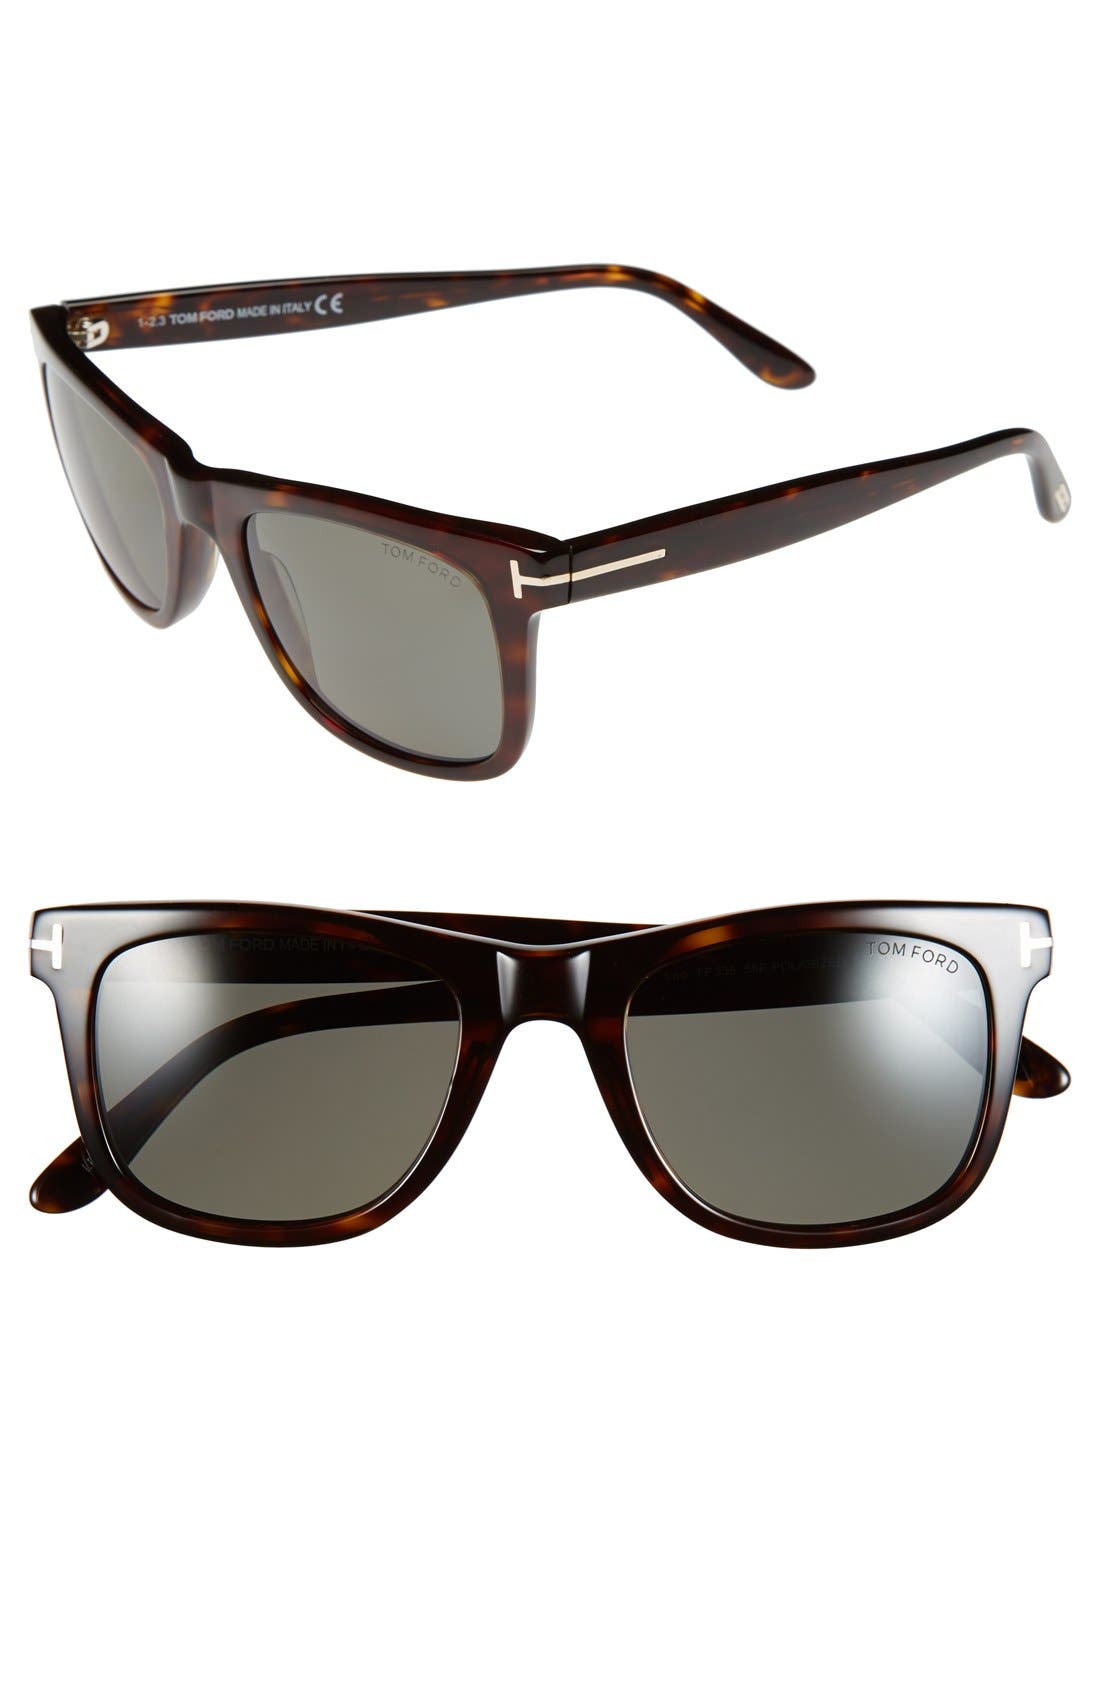 Tom Ford Leo 52mm Polarized Sunglasses in Shiny Classic Havana at Nordstrom